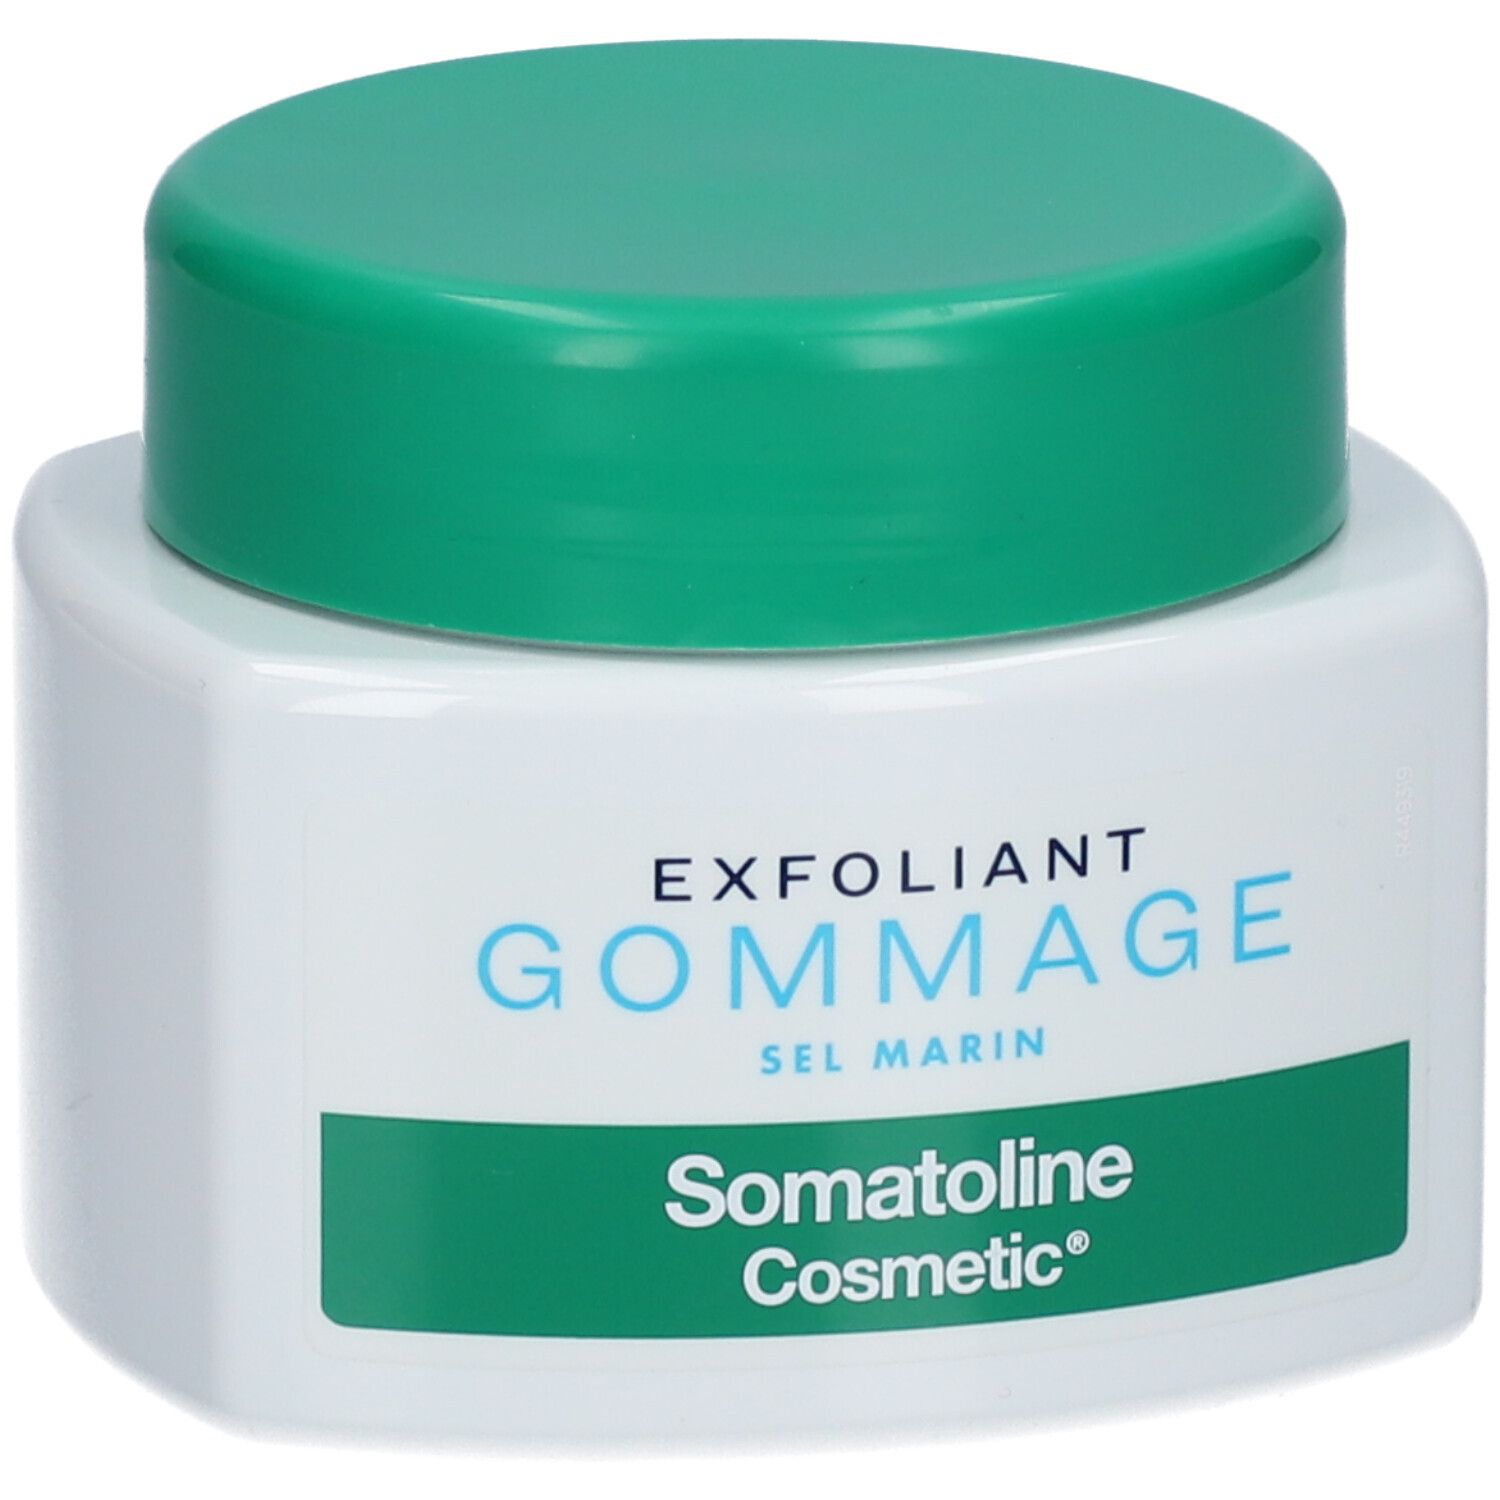 Somatoline Cosmetic® Meersalz-Peeling